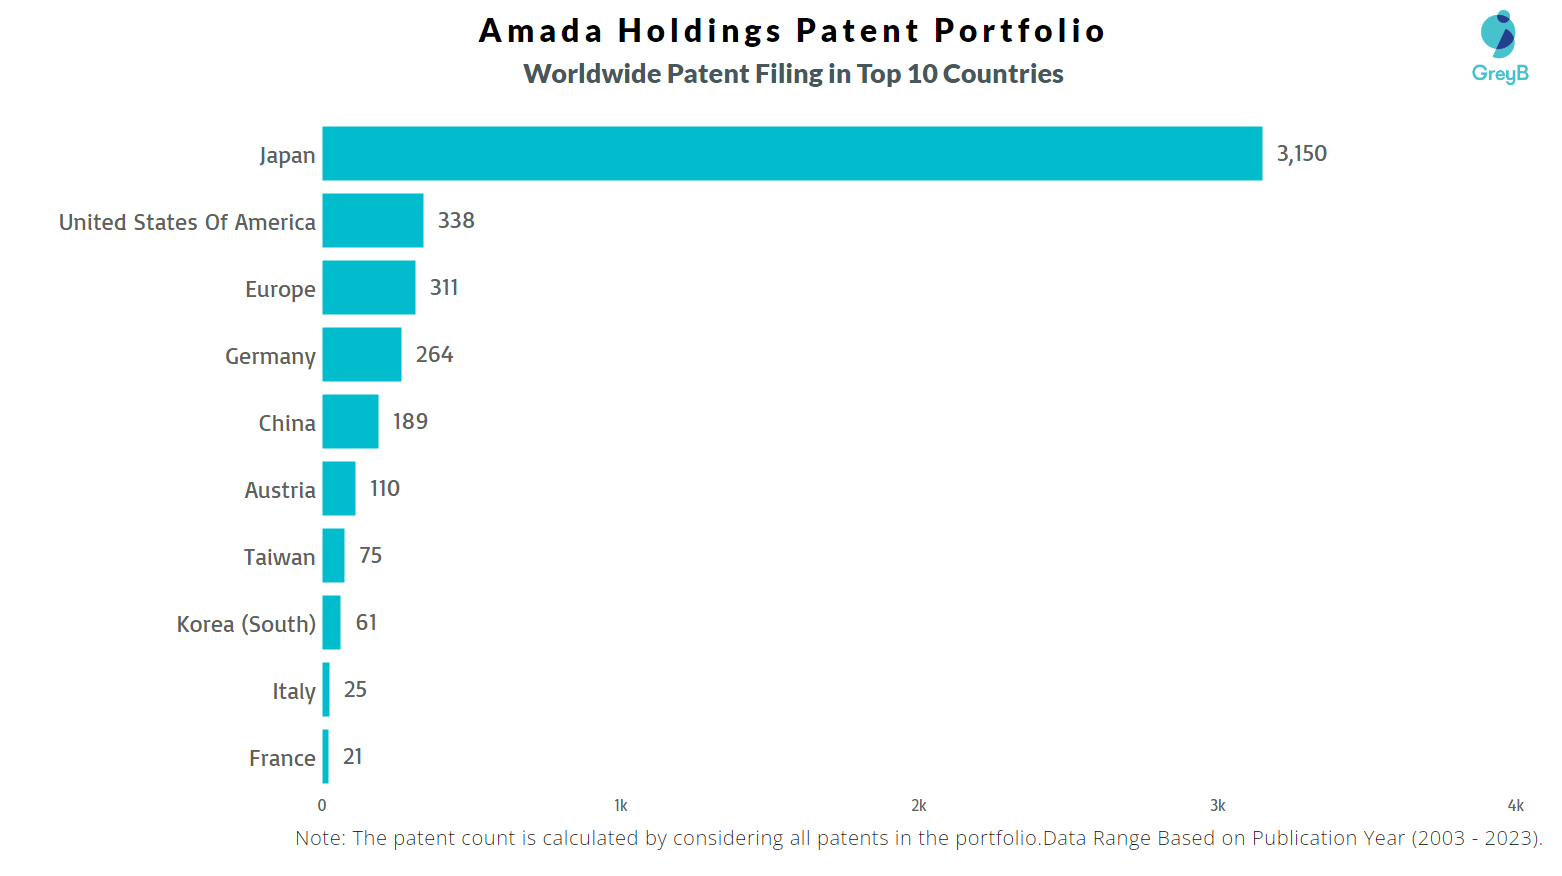 Amada Holdings Worldwide Patent Filing